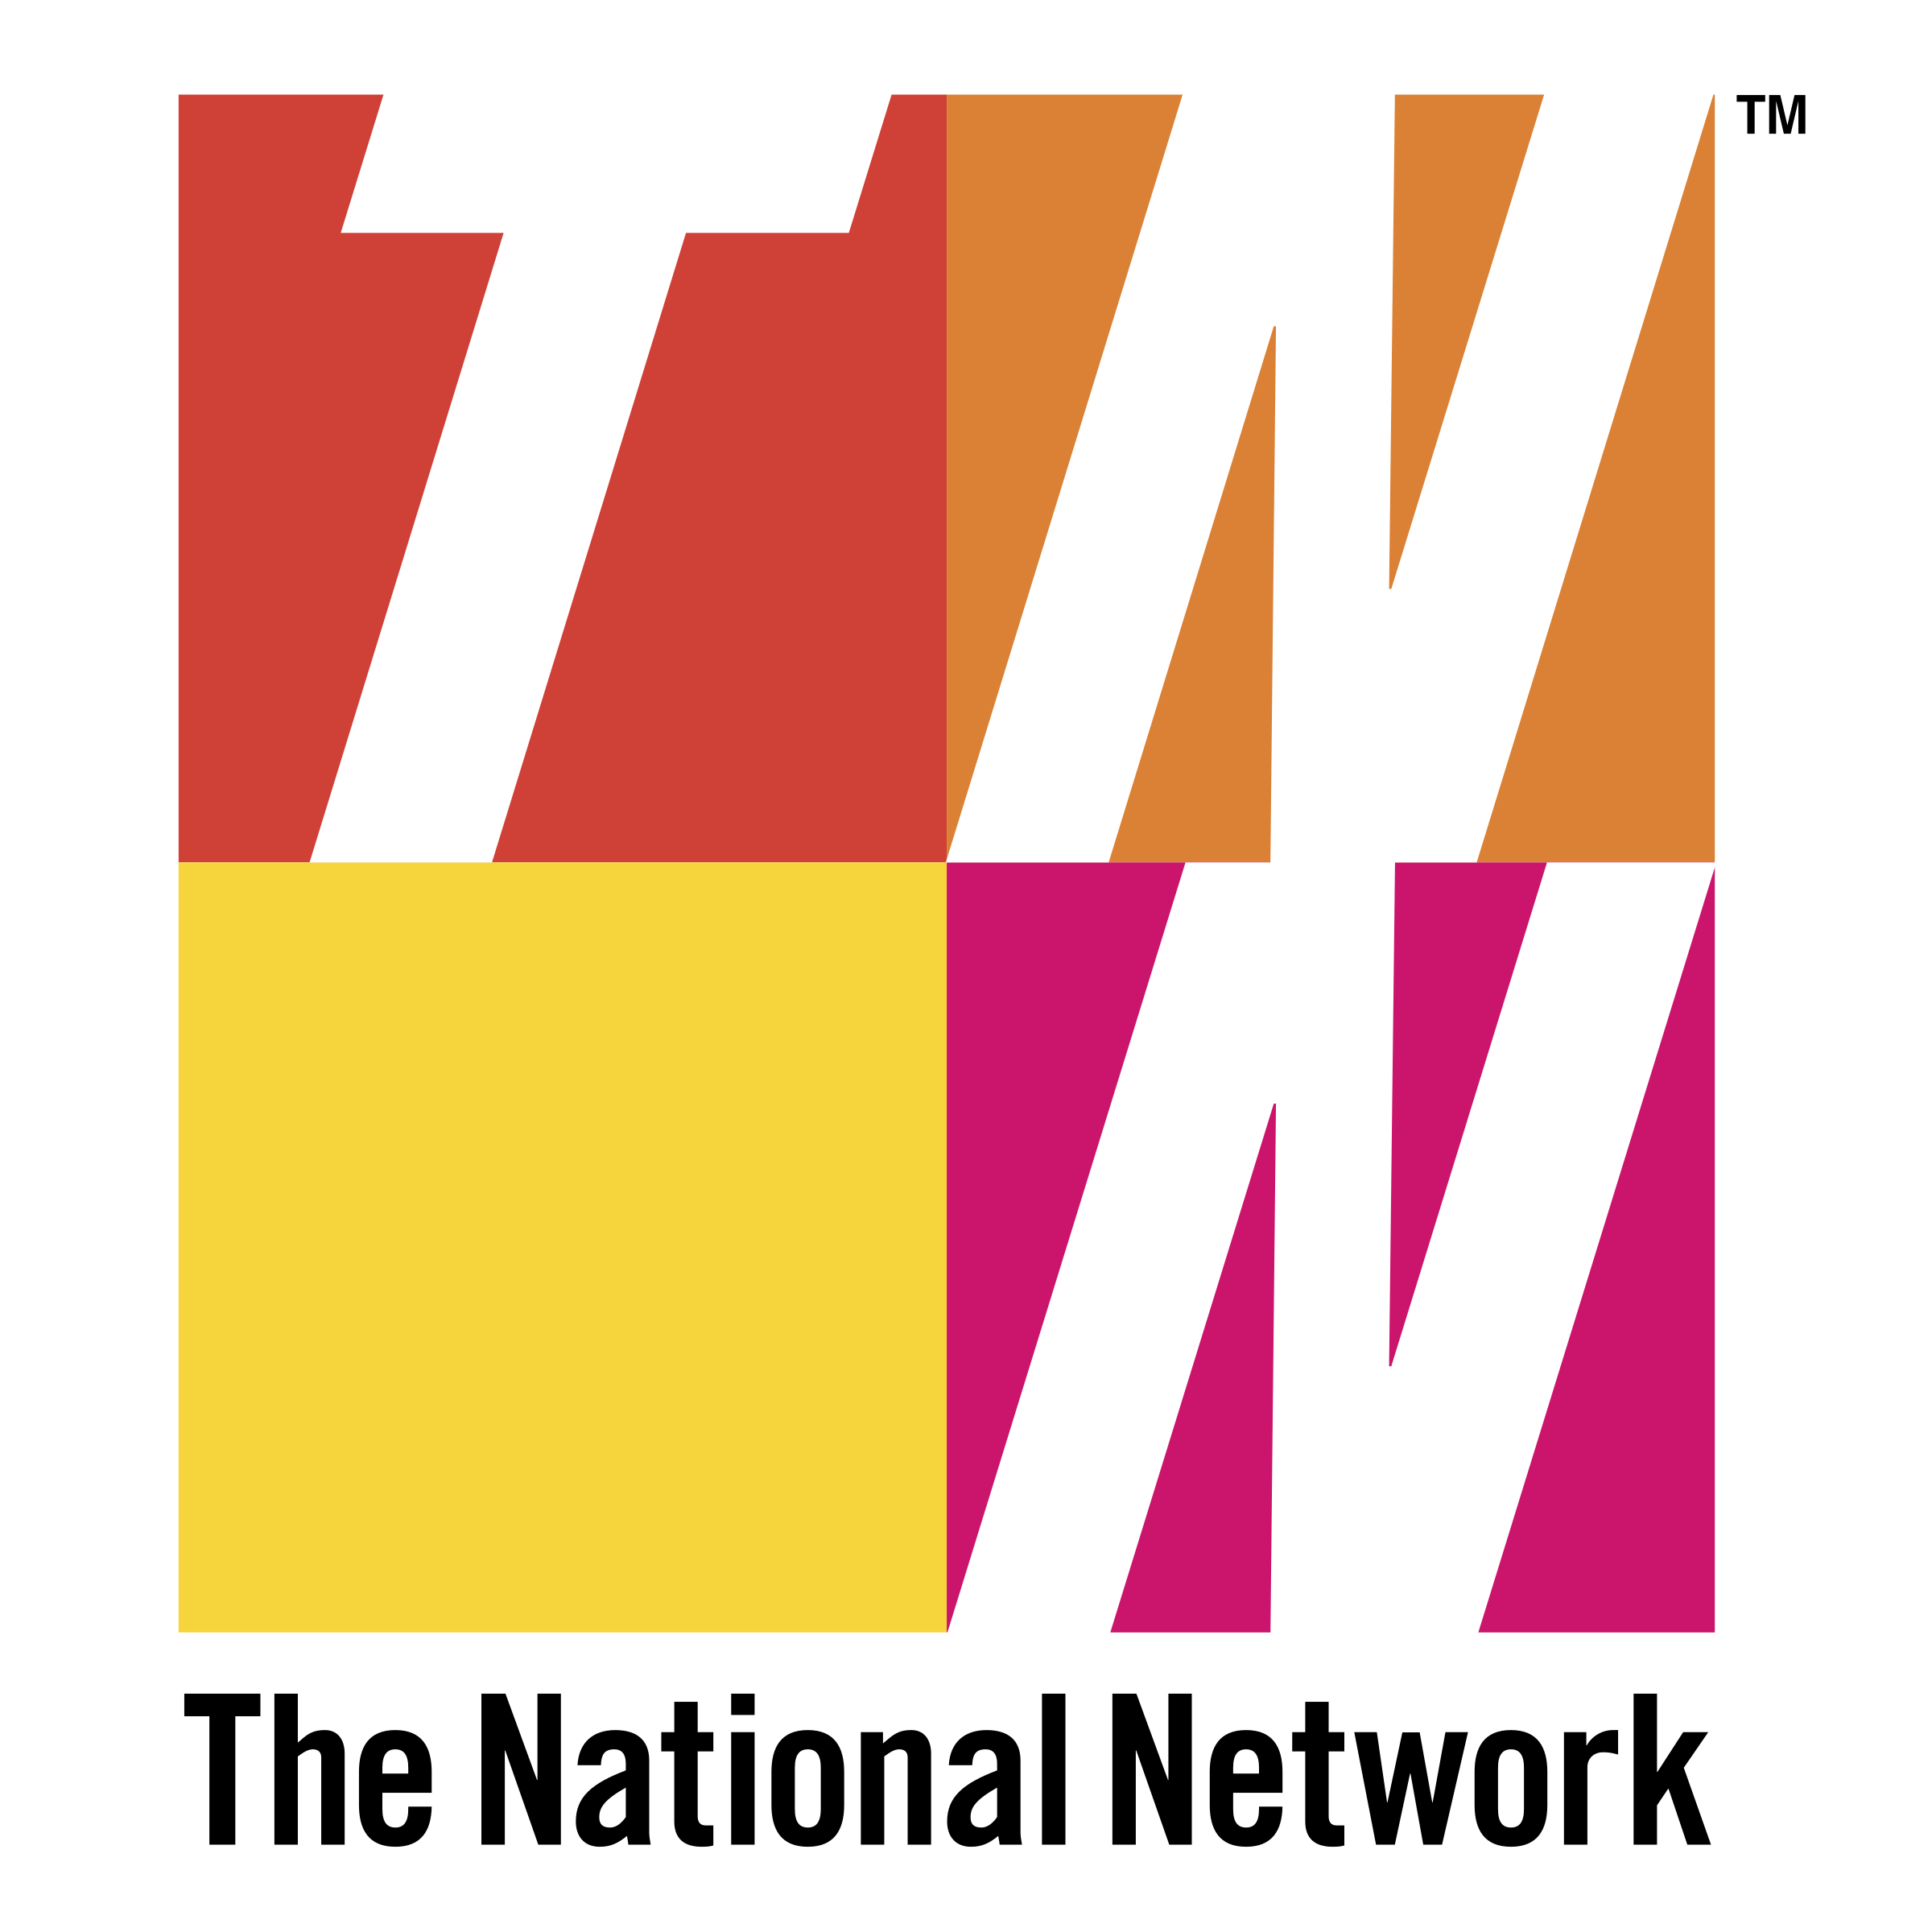 TNN Logo - TNN Logo PNG Transparent & SVG Vector - Freebie Supply